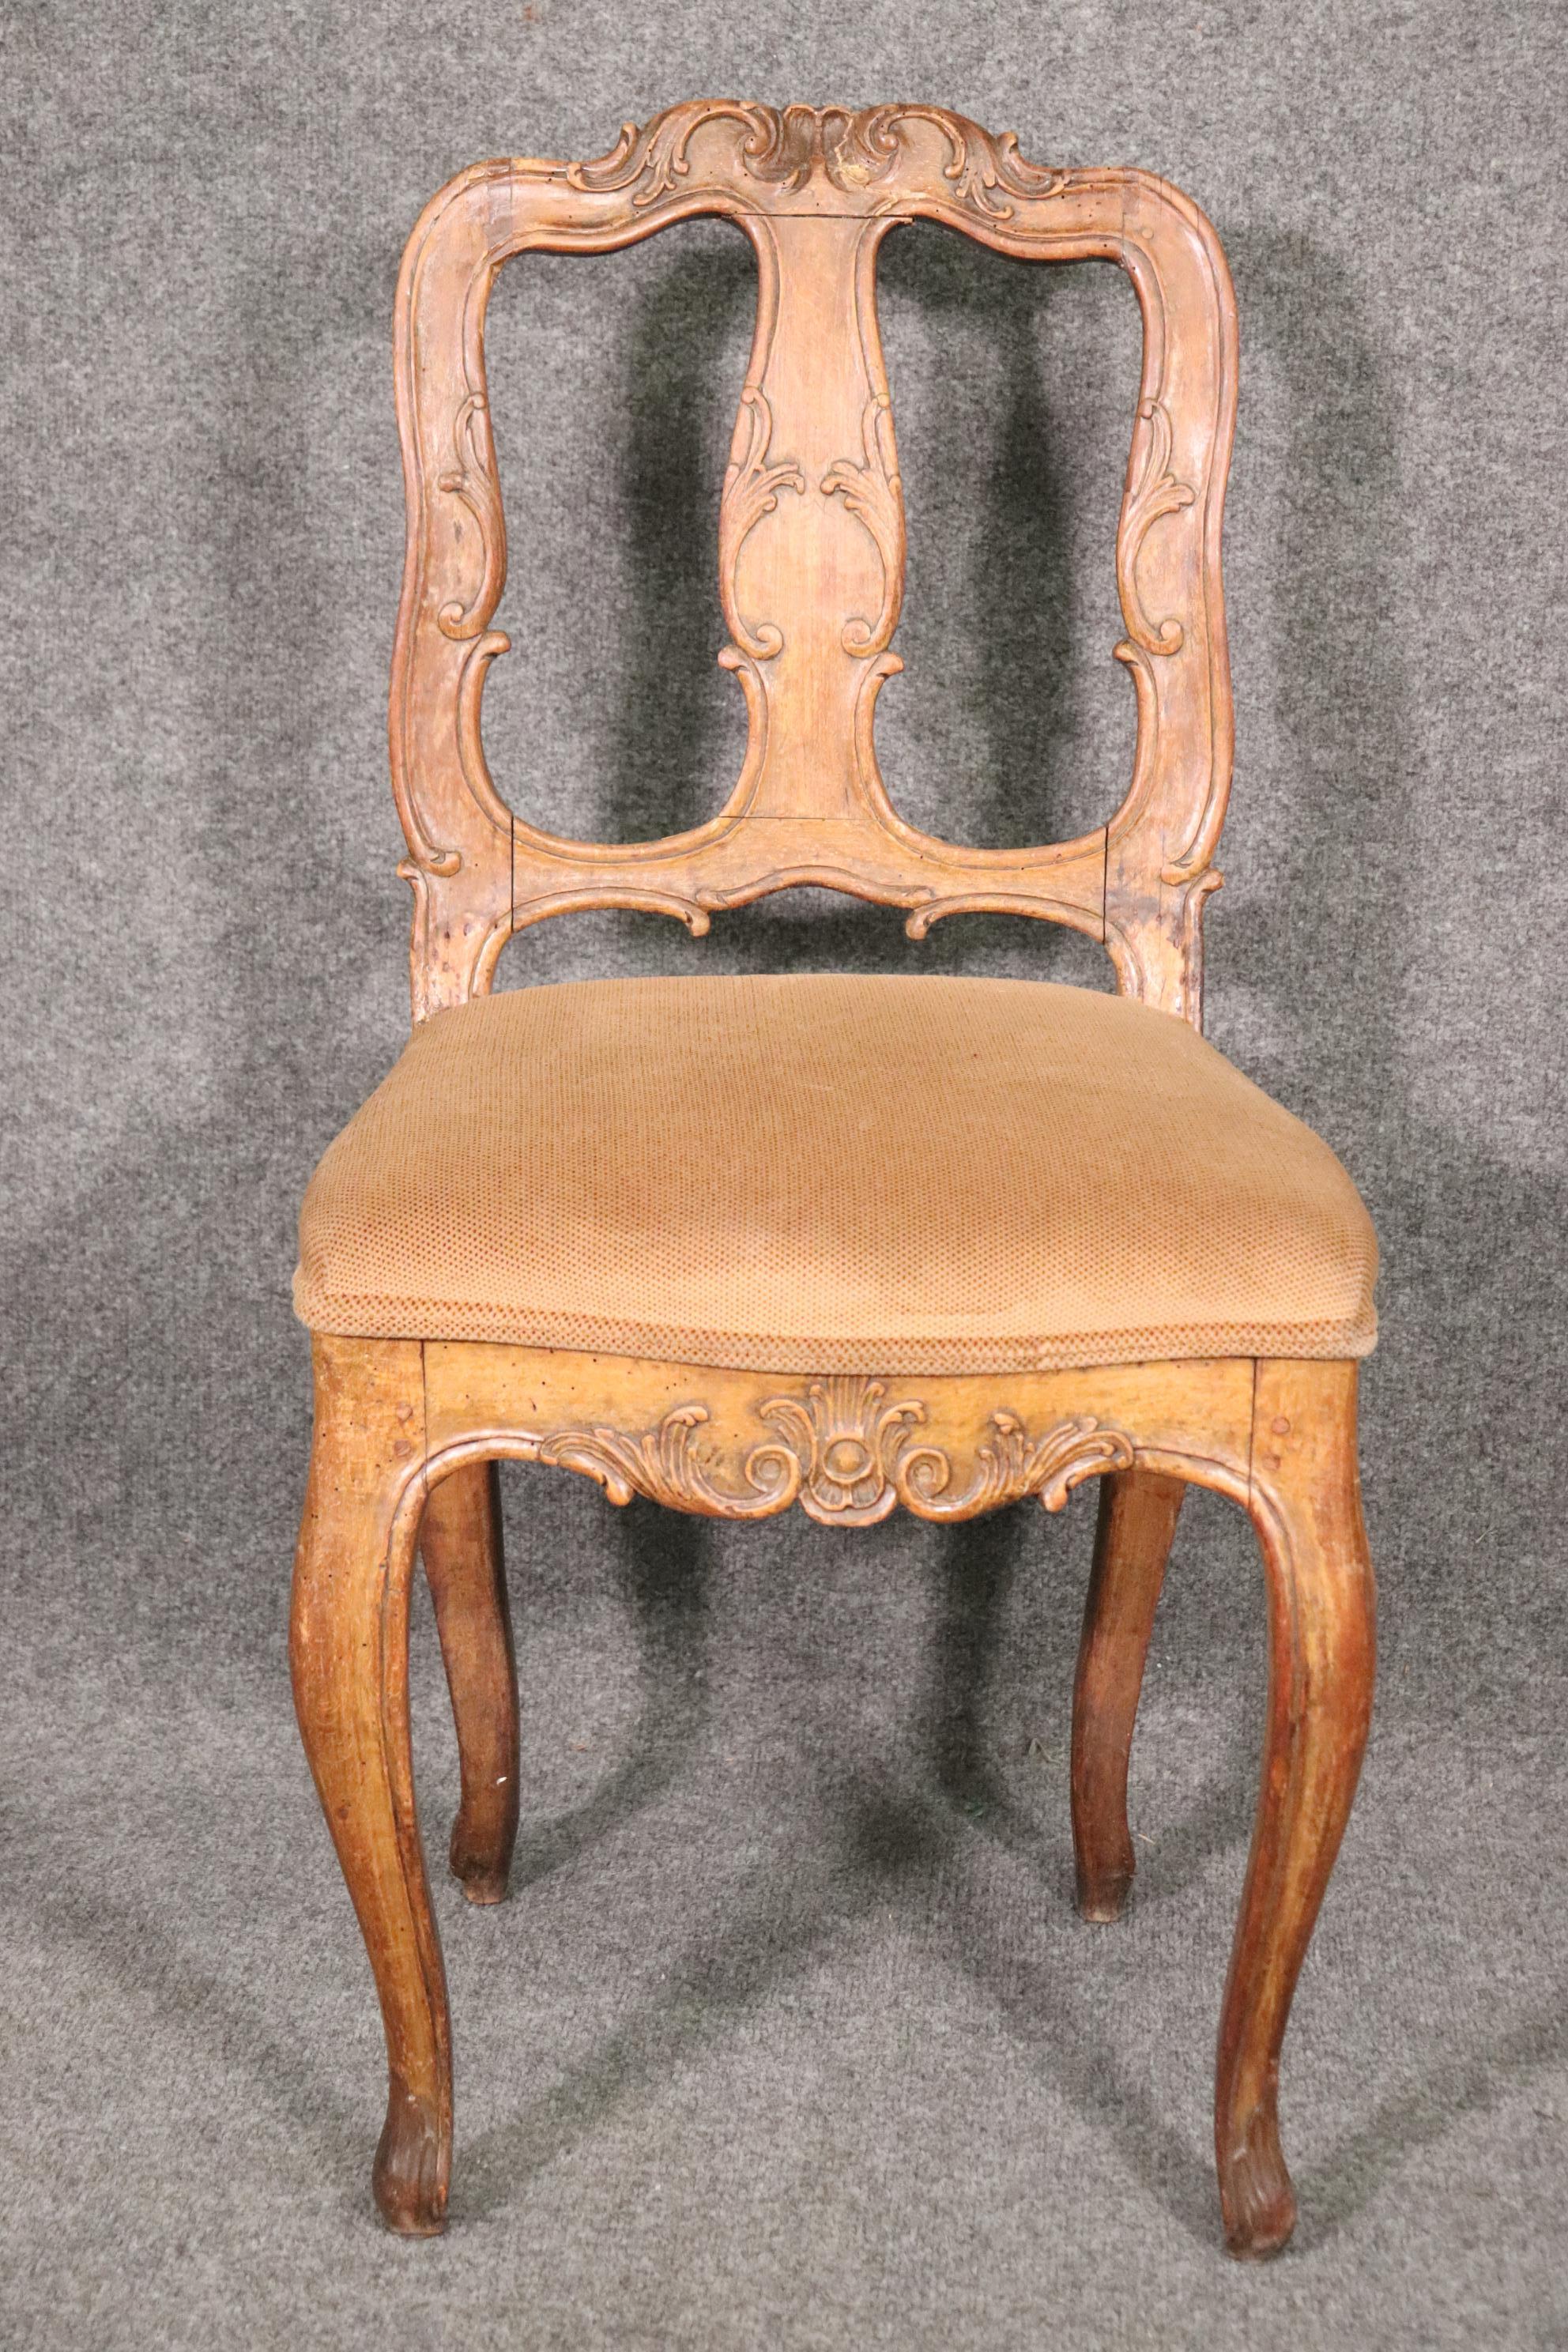 Period 1770s Era Italian Provincial Walnut Desk or Vanity Chair For Sale 1